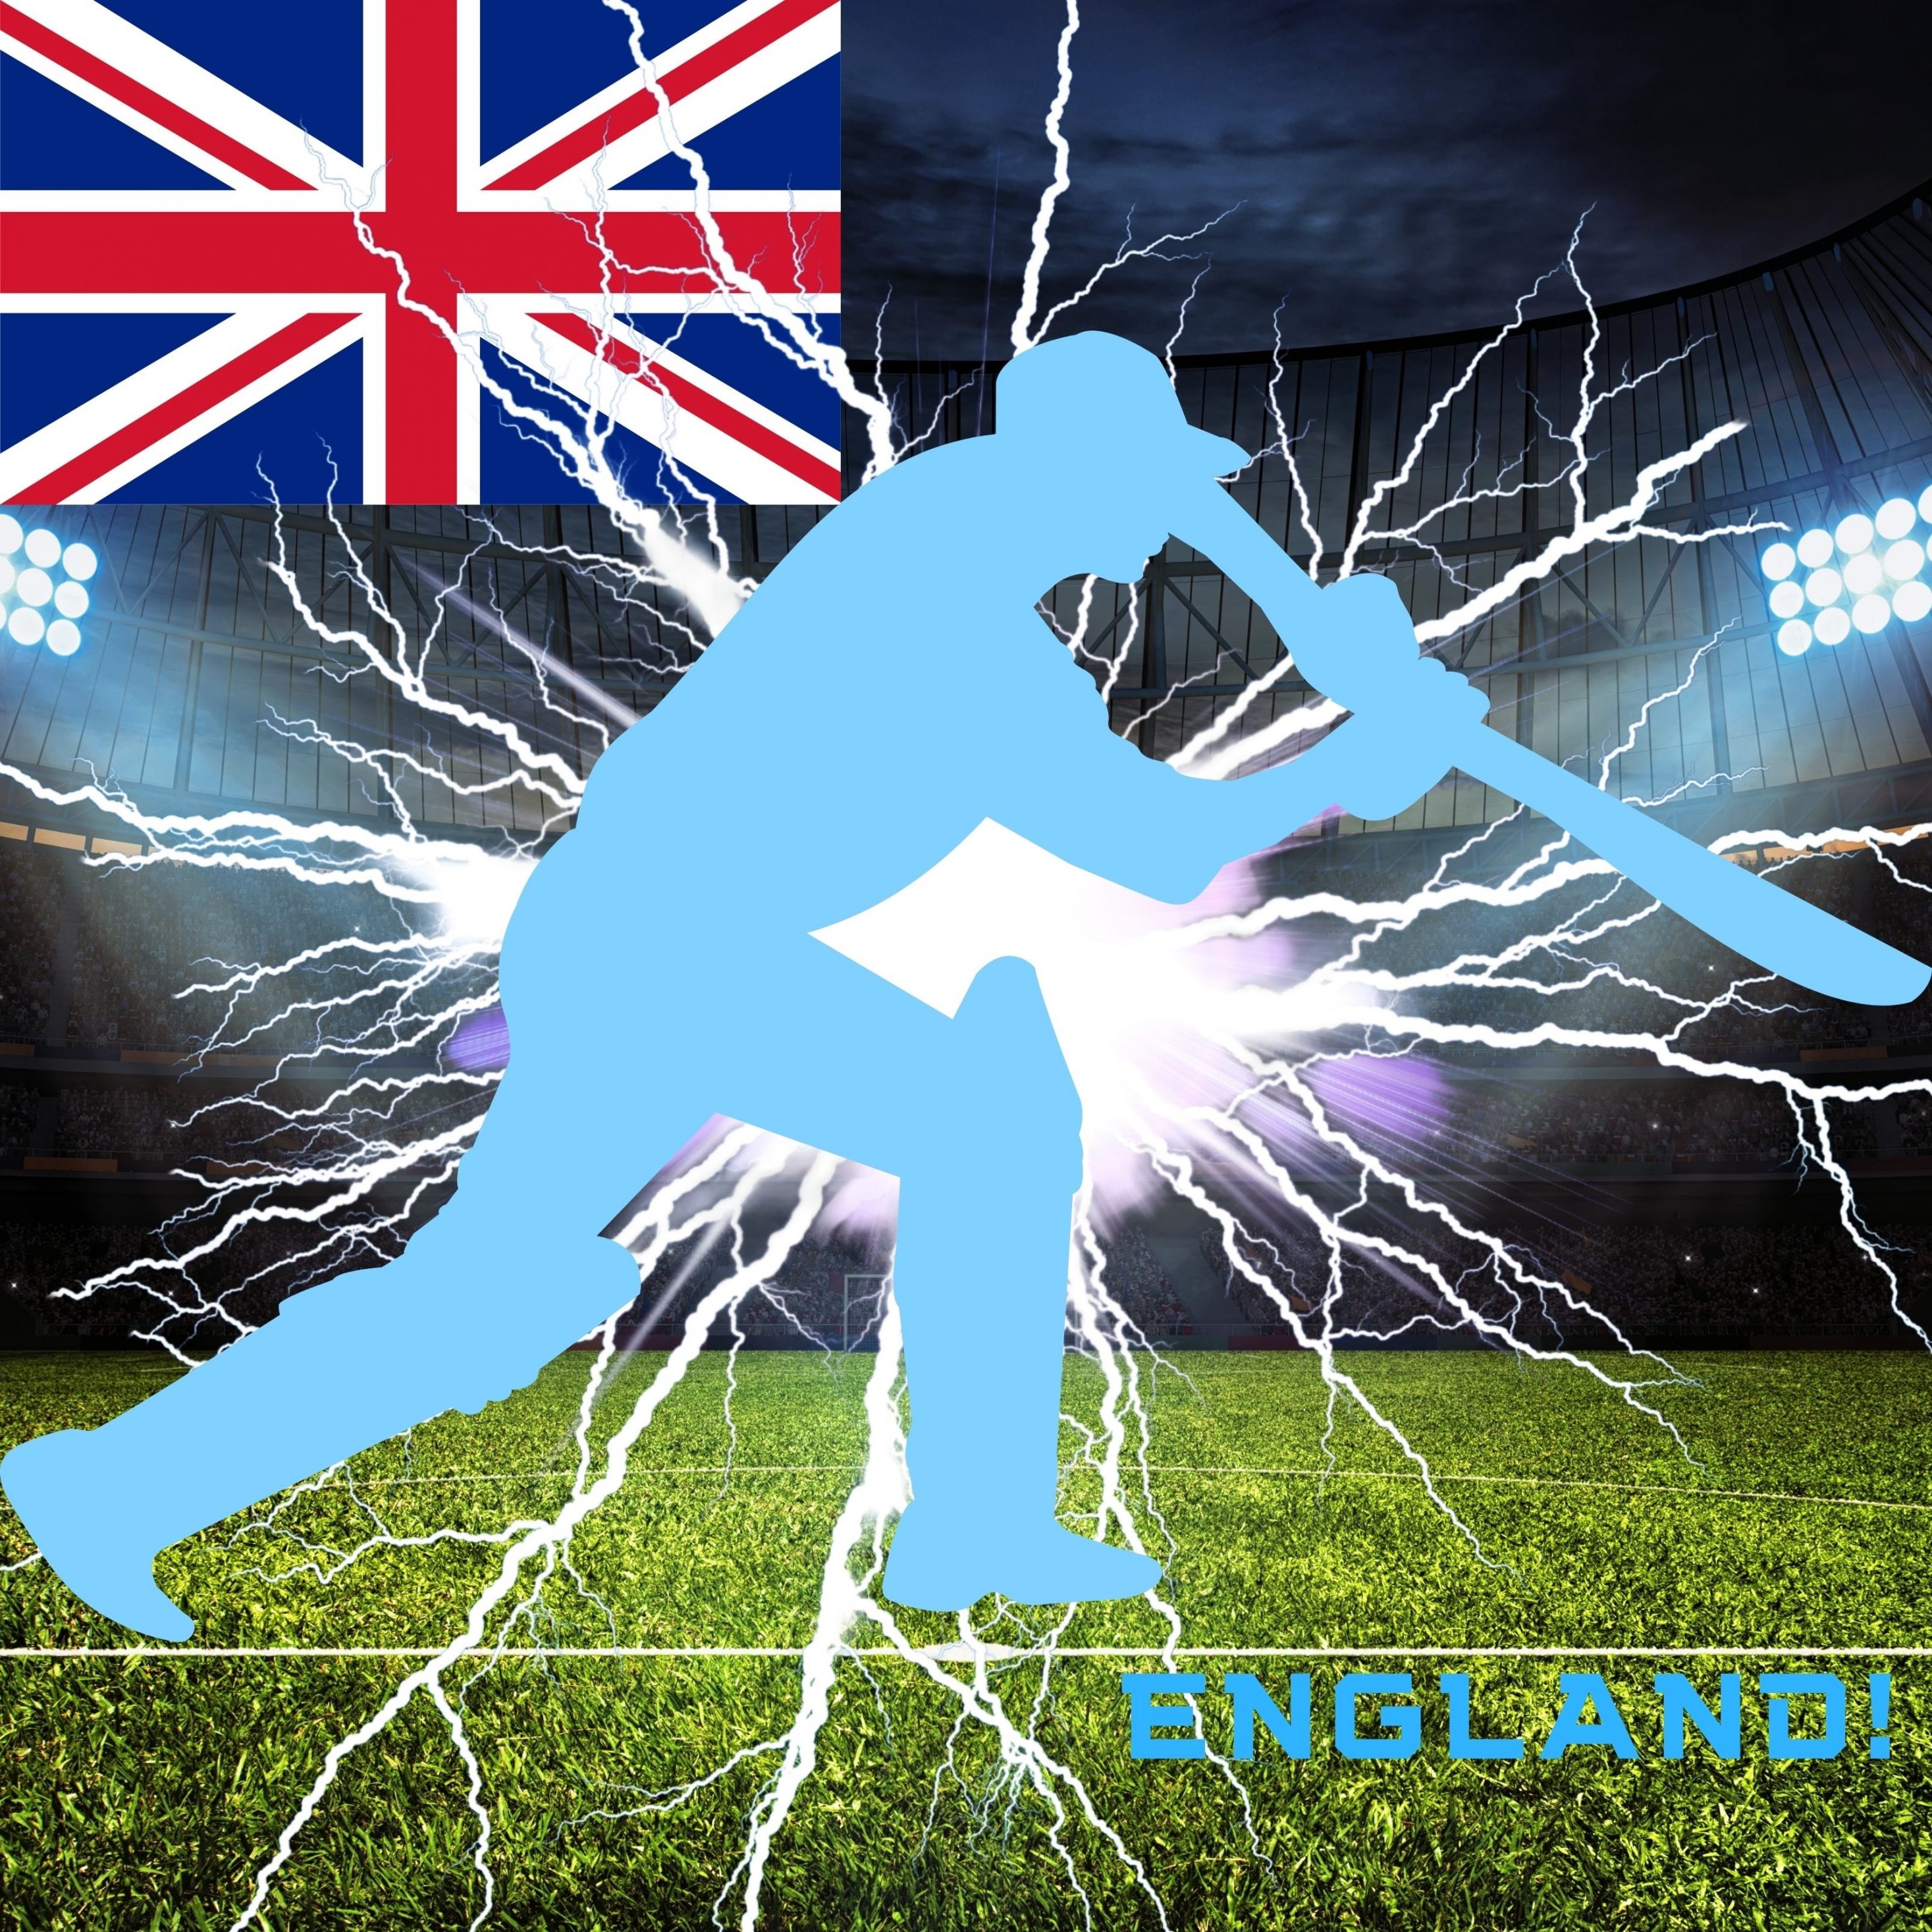 2934x2934 iOS iPad wallpaper 4k England Cricket Stadium iPad Wallpaper 2934x2934 pixels resolution